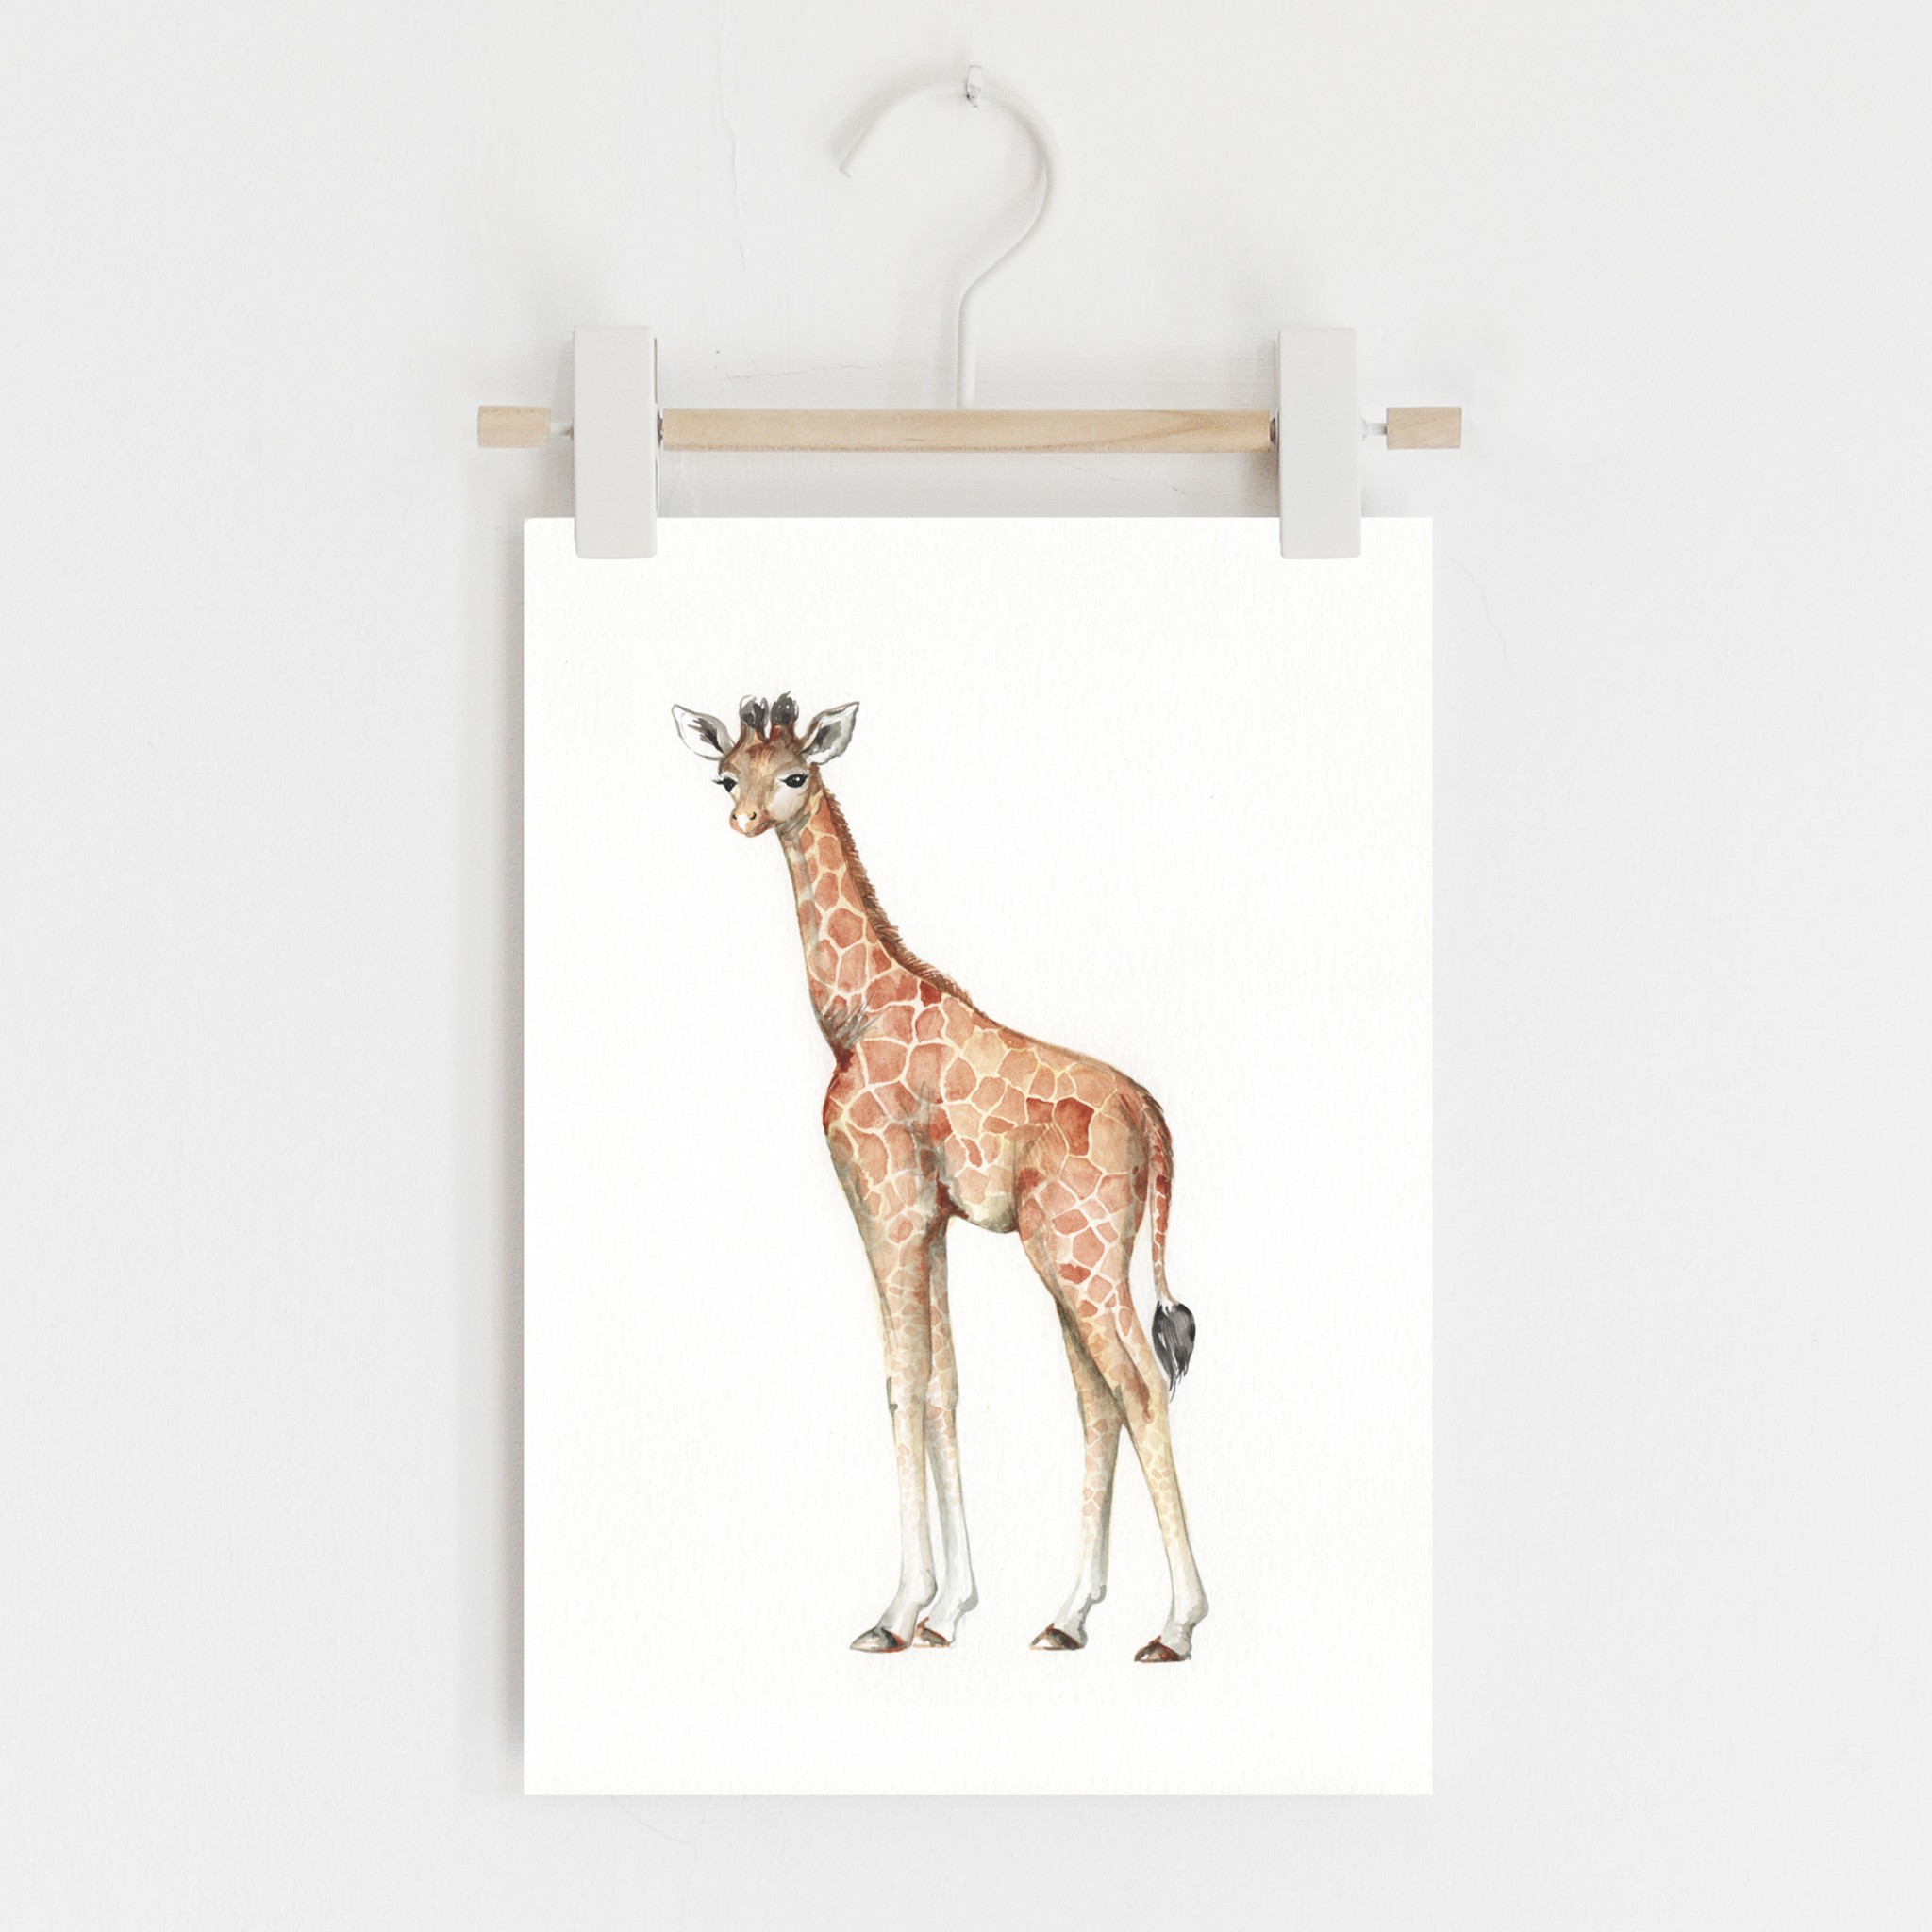 watercolour safari prints, nursery safari prints, nursery wildlife prints, wildlife art work, giraffe print, safari decor,